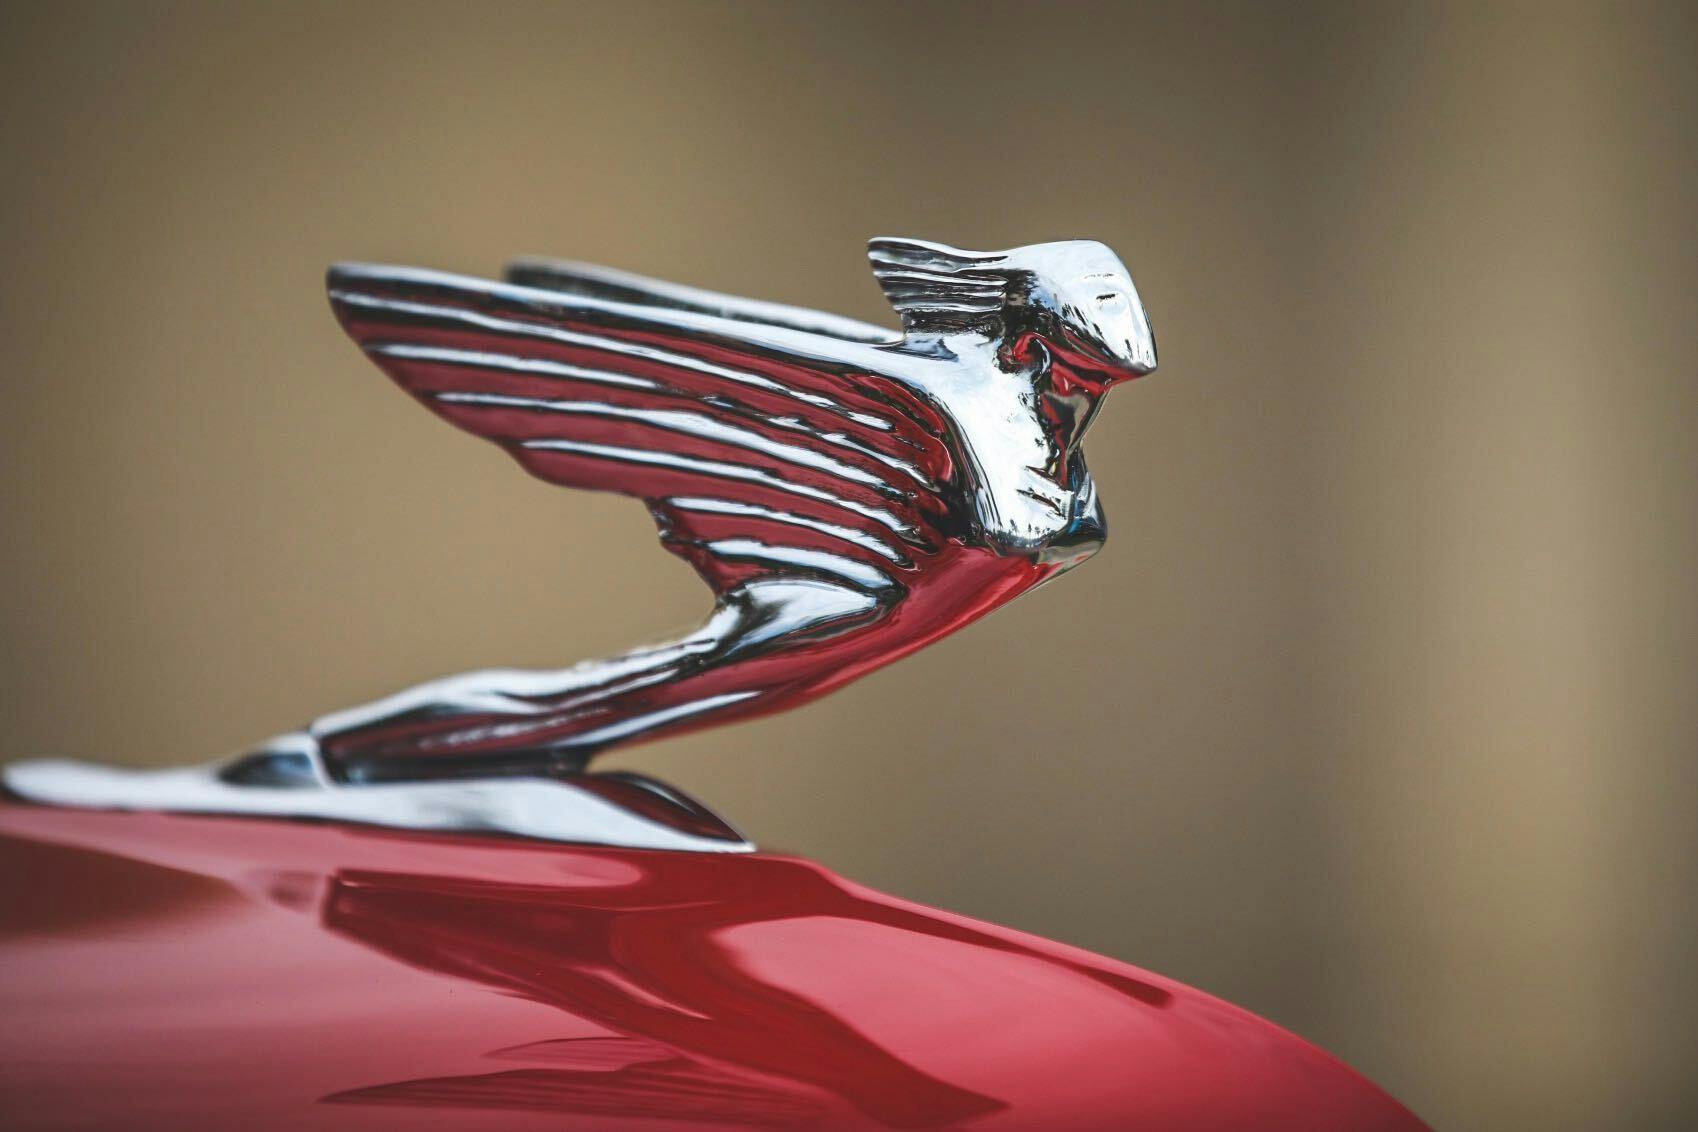 1934 Chevrolet Flying Eagle Hood Ornament. Classic vintage